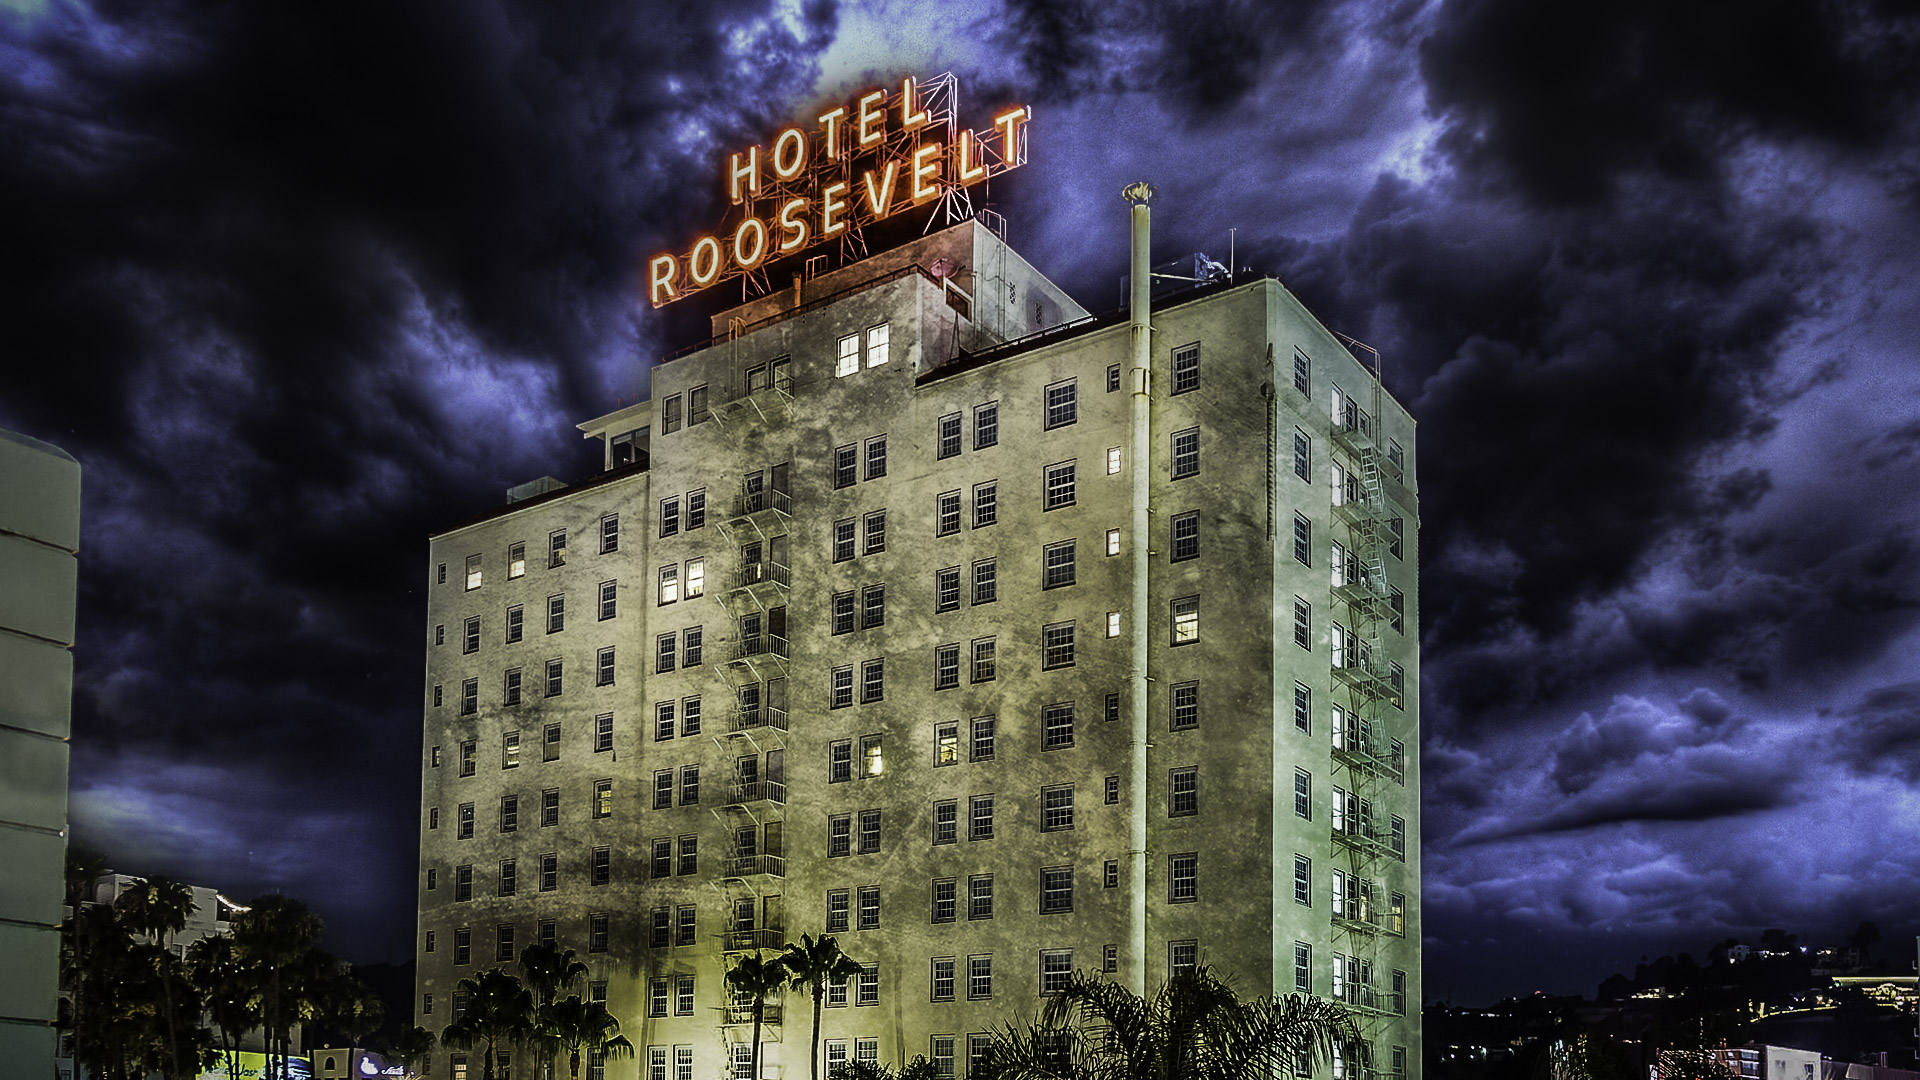 The Haunted Hollywood Roosevelt Hotel